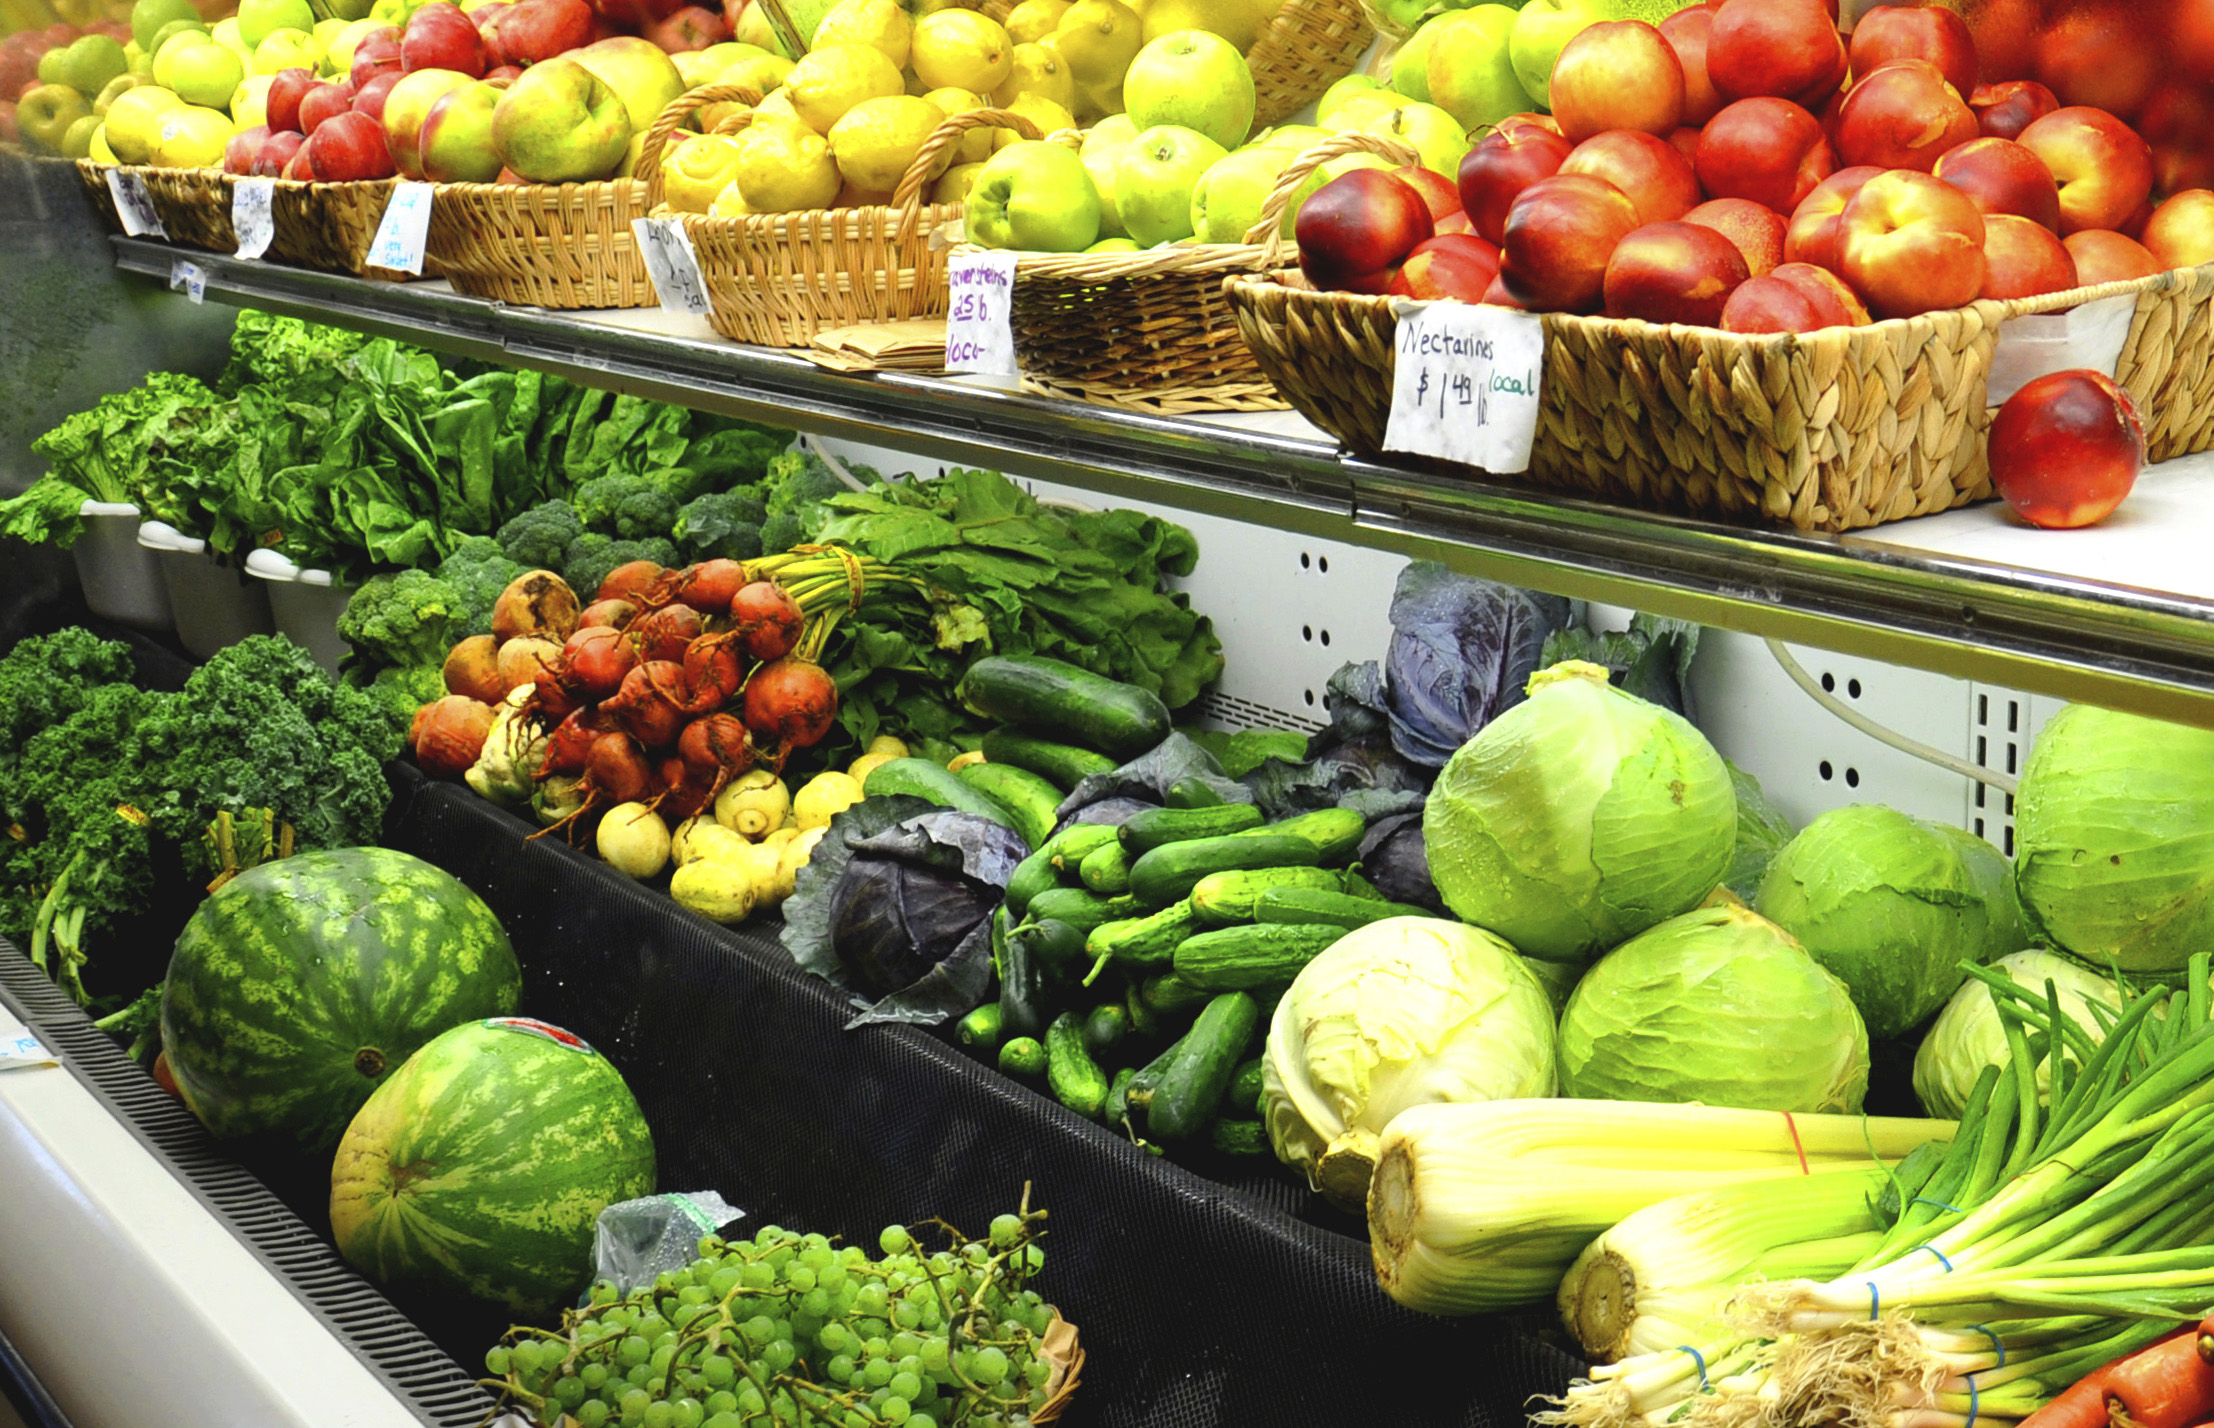 Economic influences on food choice